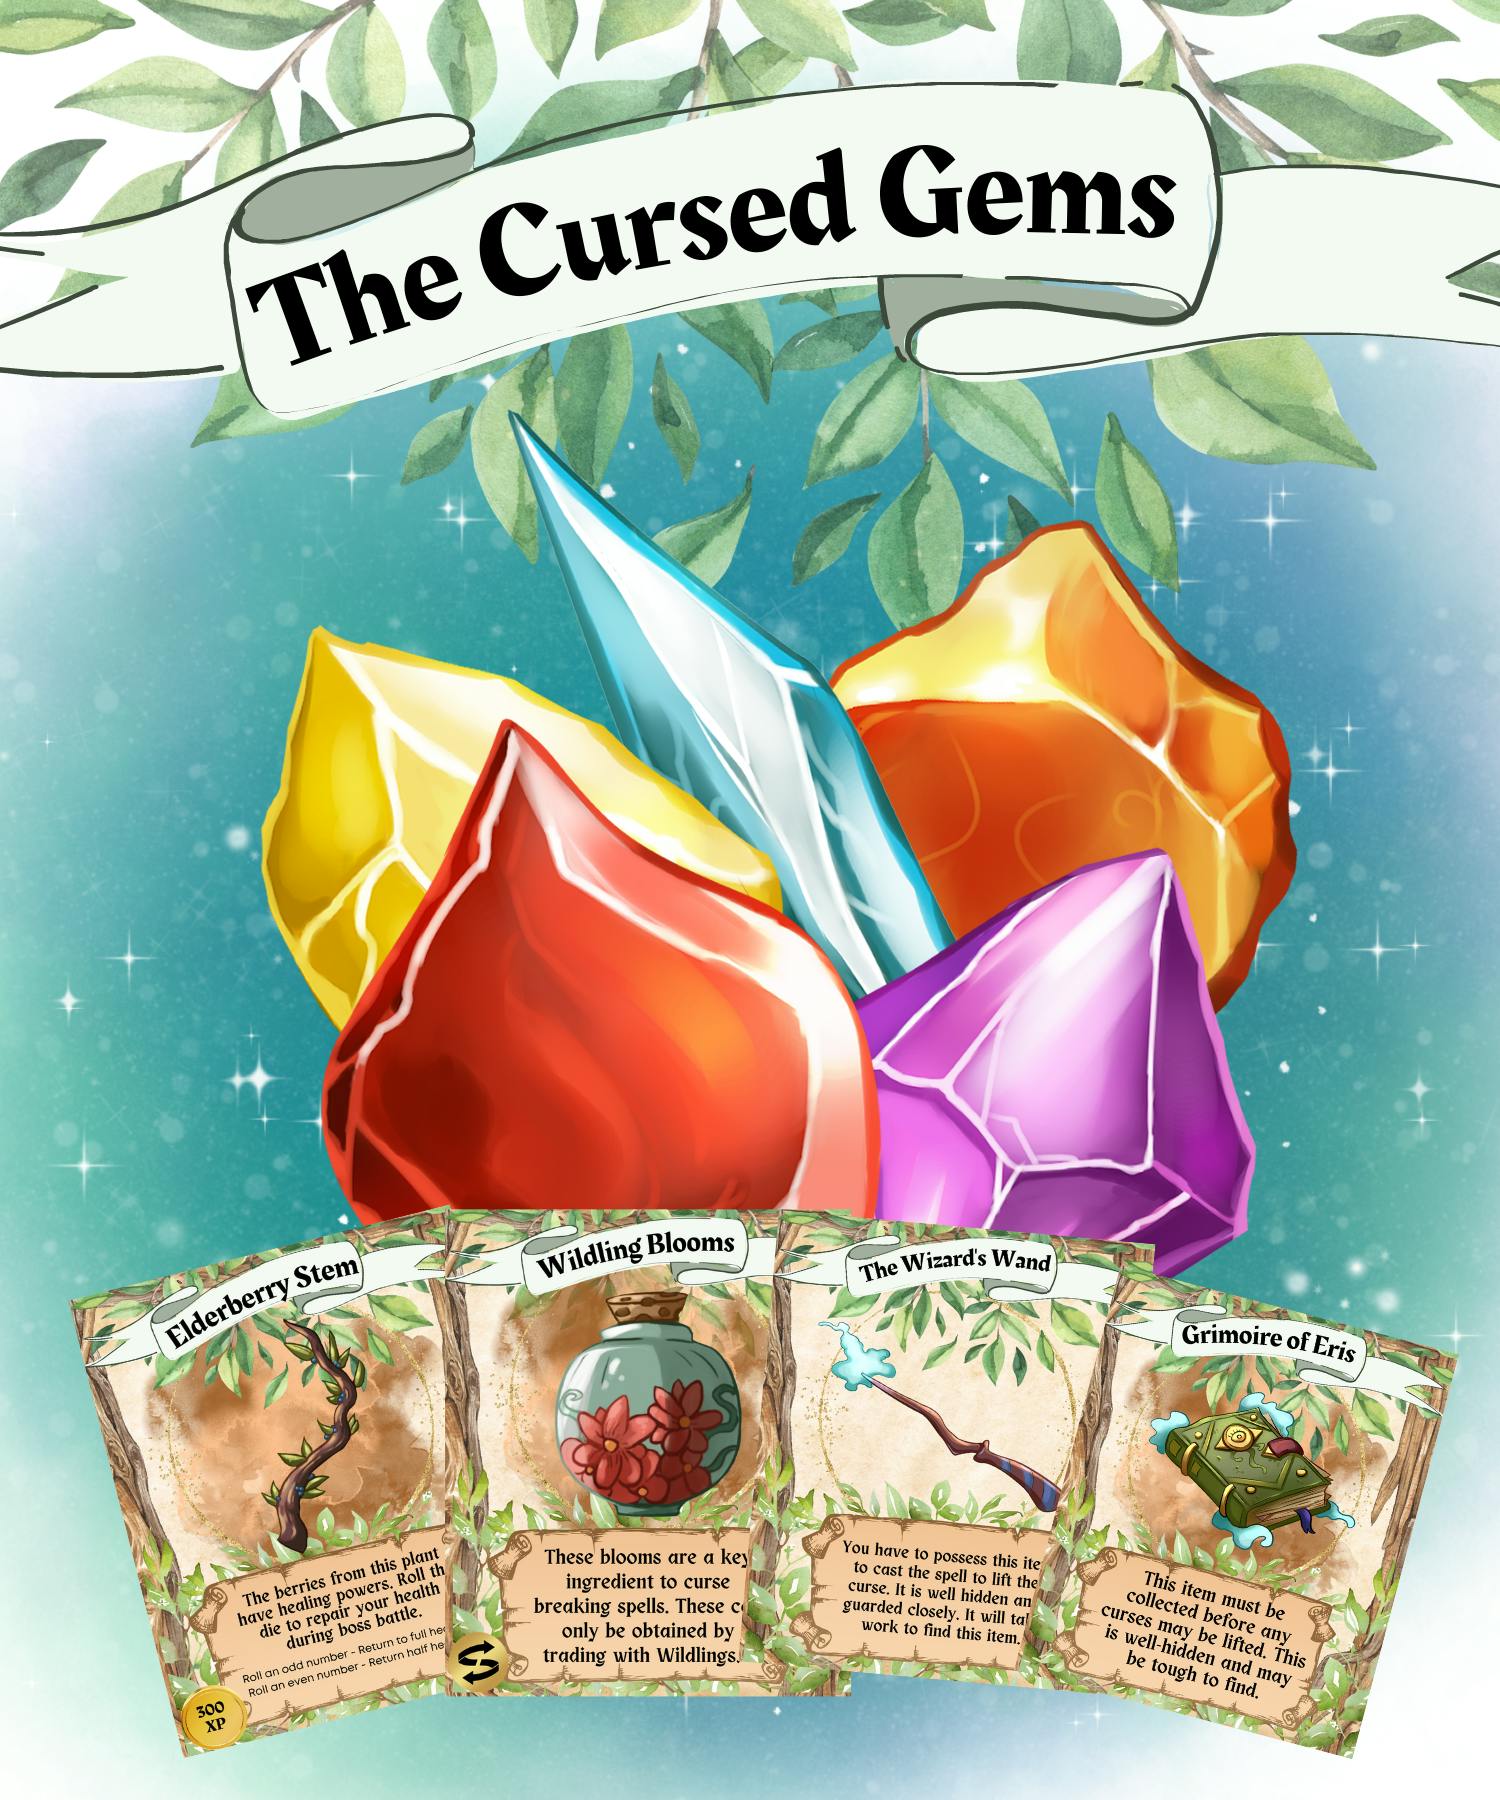 The Cursed Gems